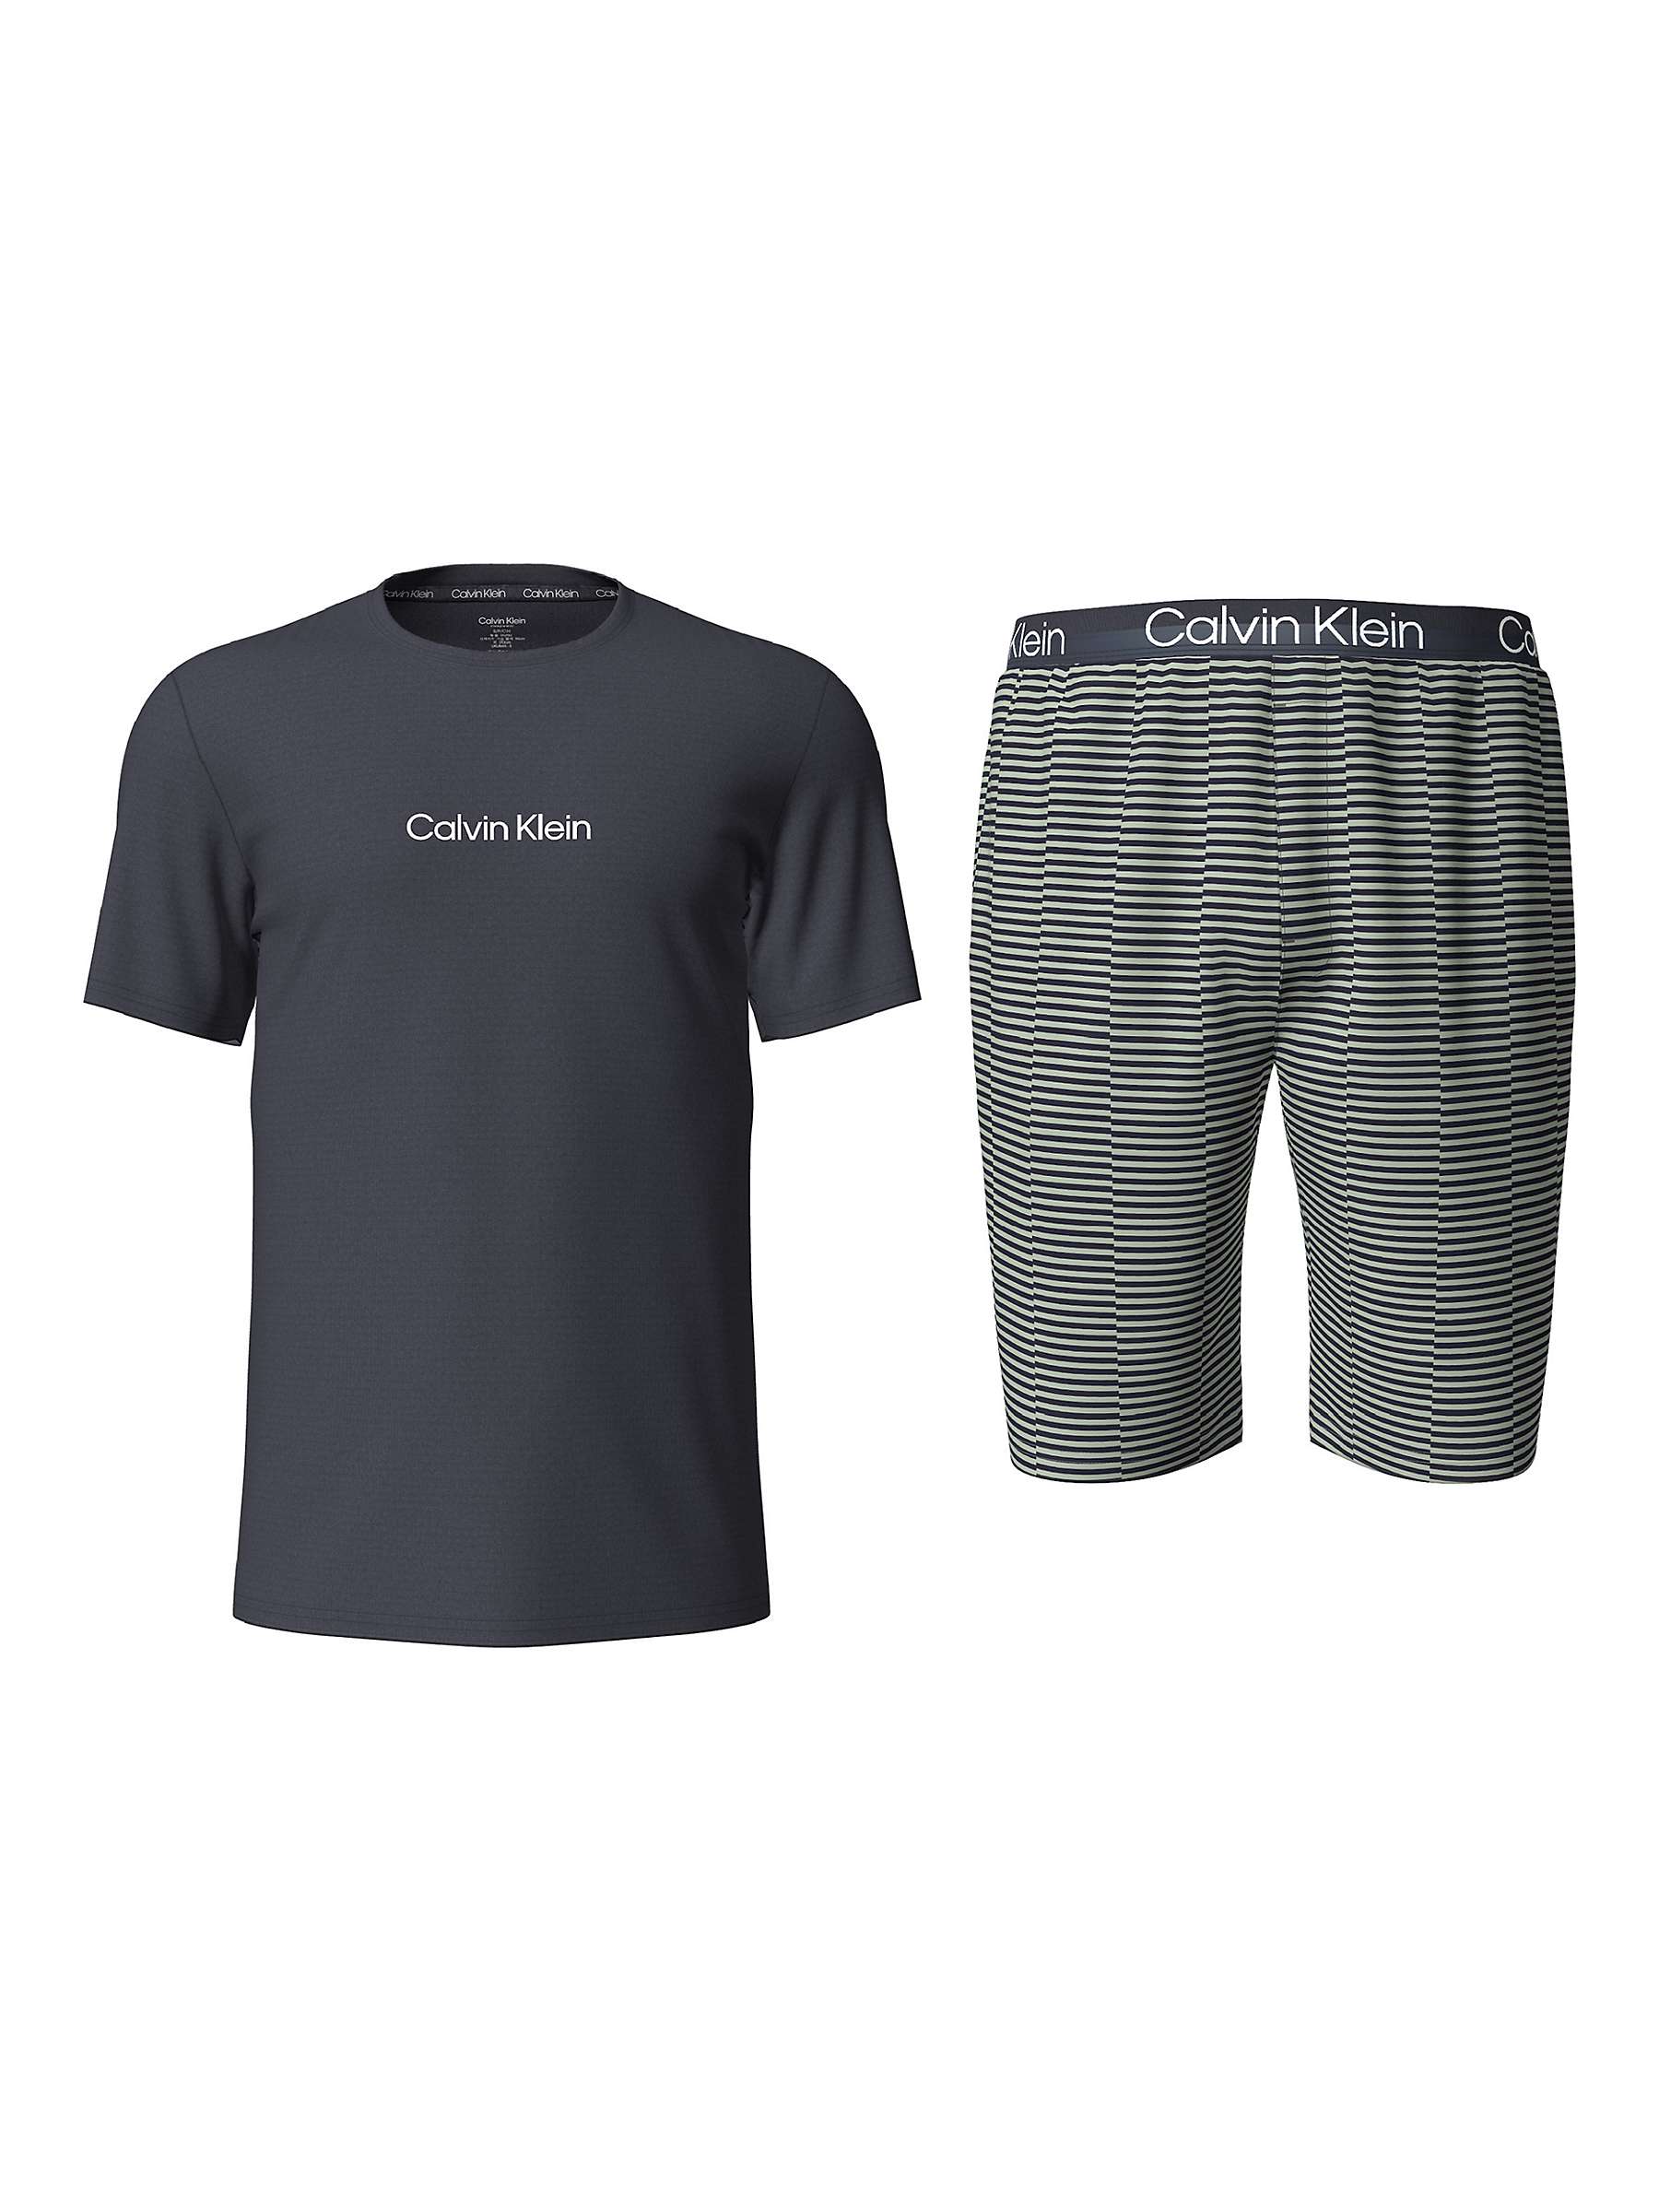 Buy Calvin Klein Sleep Striped Pyjama Set, Sky Top/Offset Stripe Online at johnlewis.com